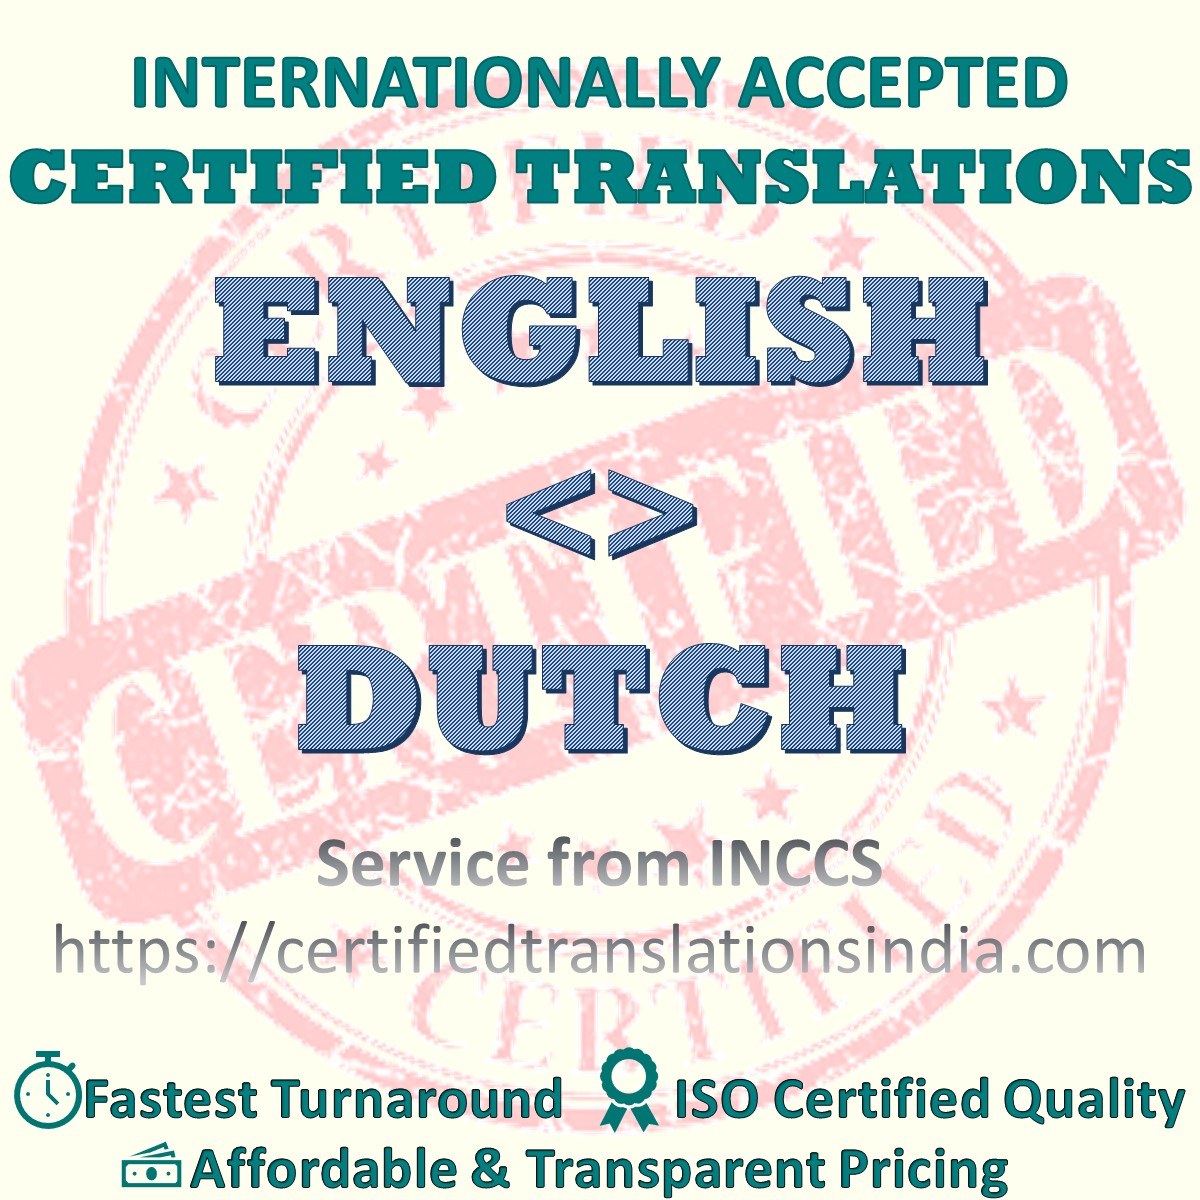 Dutch Language Translation Services